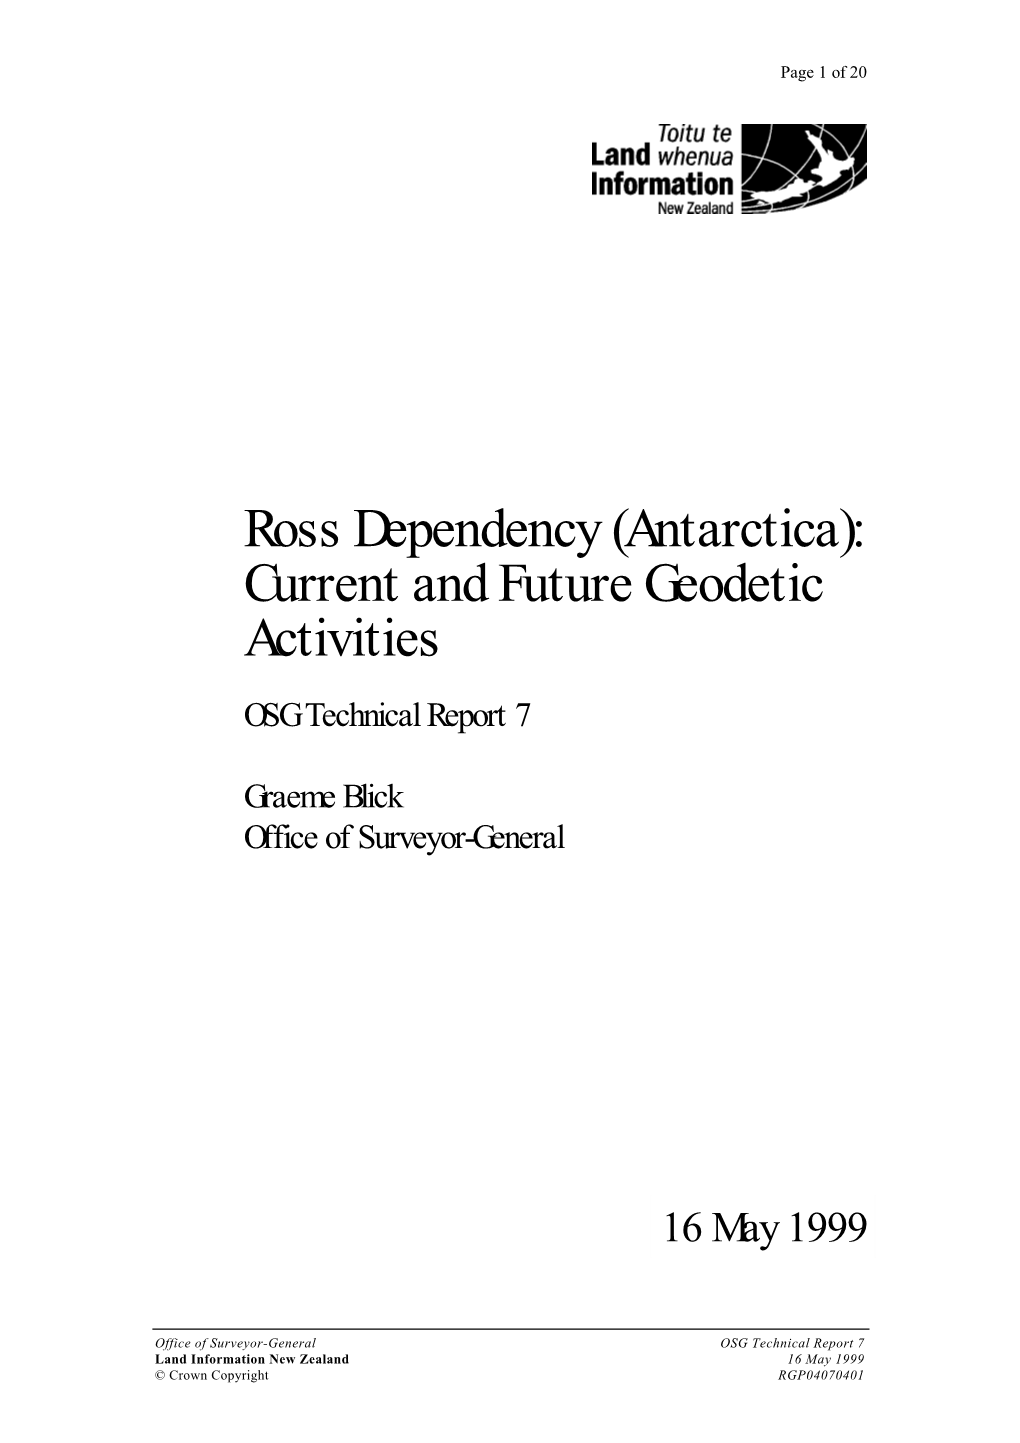 Ross Dependency (Antarctica): Current and Future Geodetic Activities OSG Technical Report 7